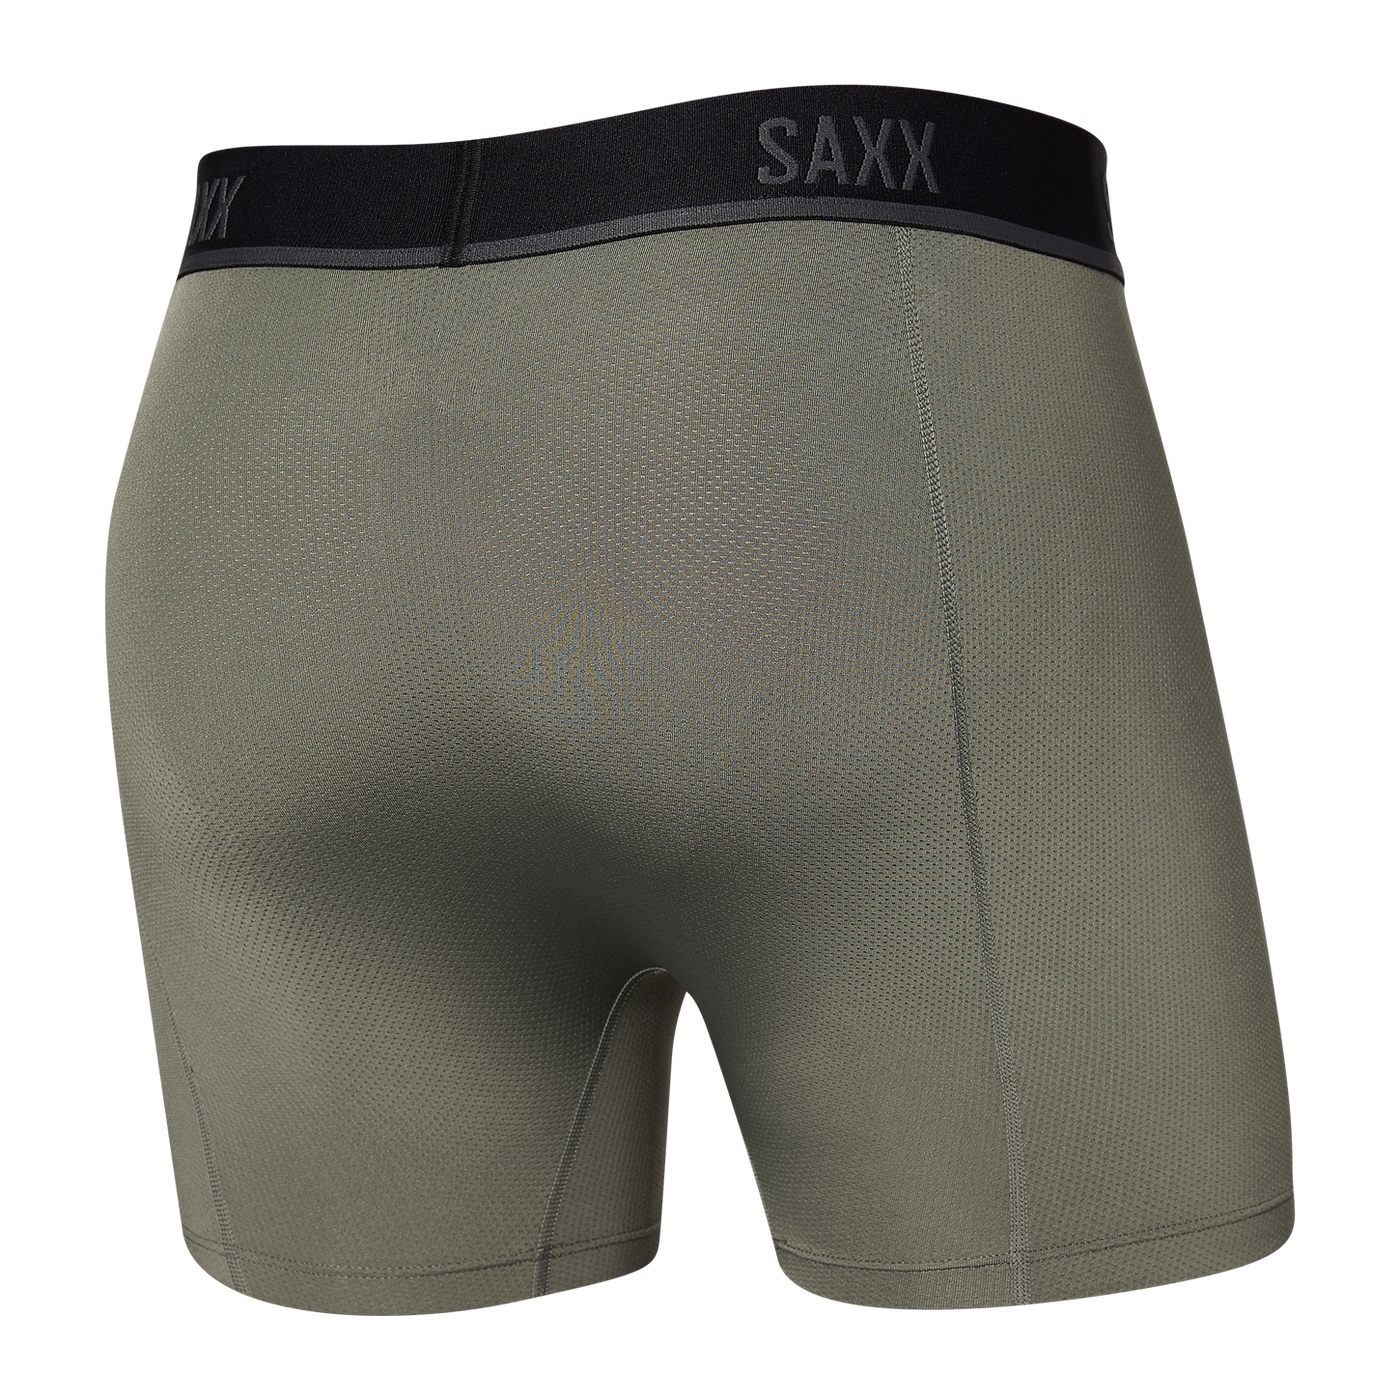 Kinetic HD Boxer Brief by Saxx Underwear